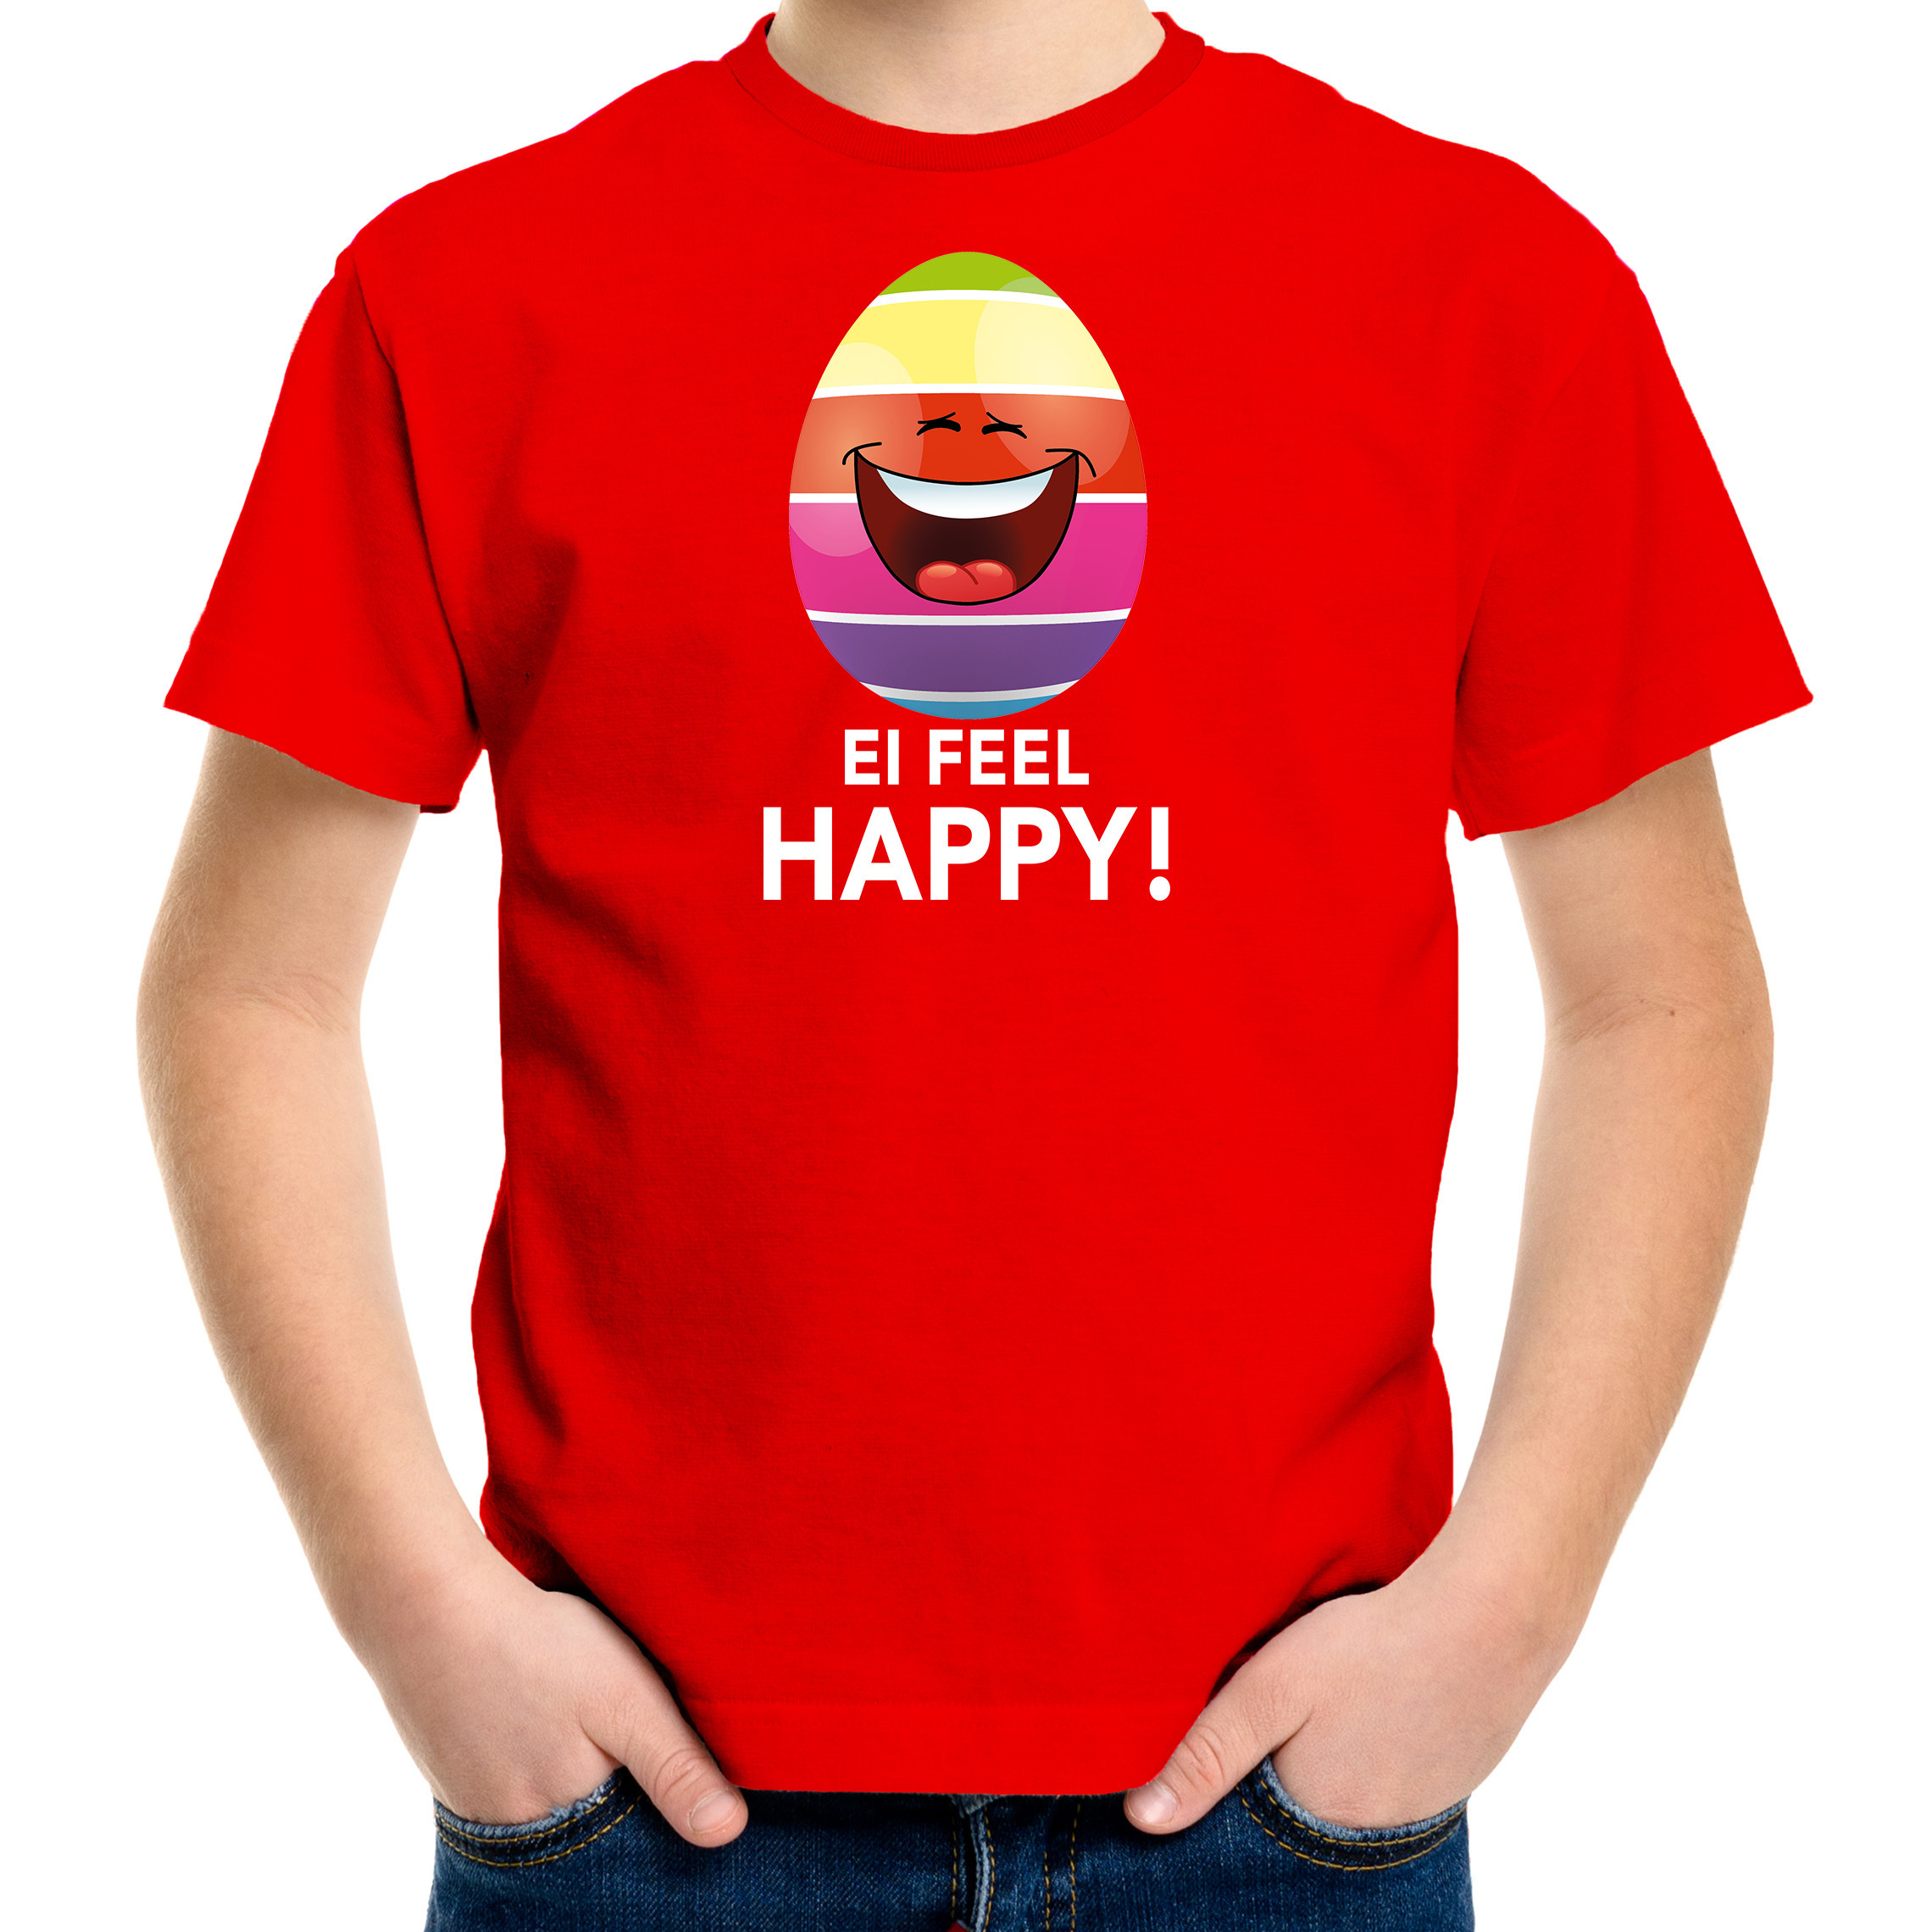 Vrolijk Paasei ei feel happy t-shirt rood voor kinderen Paas kleding-outfit